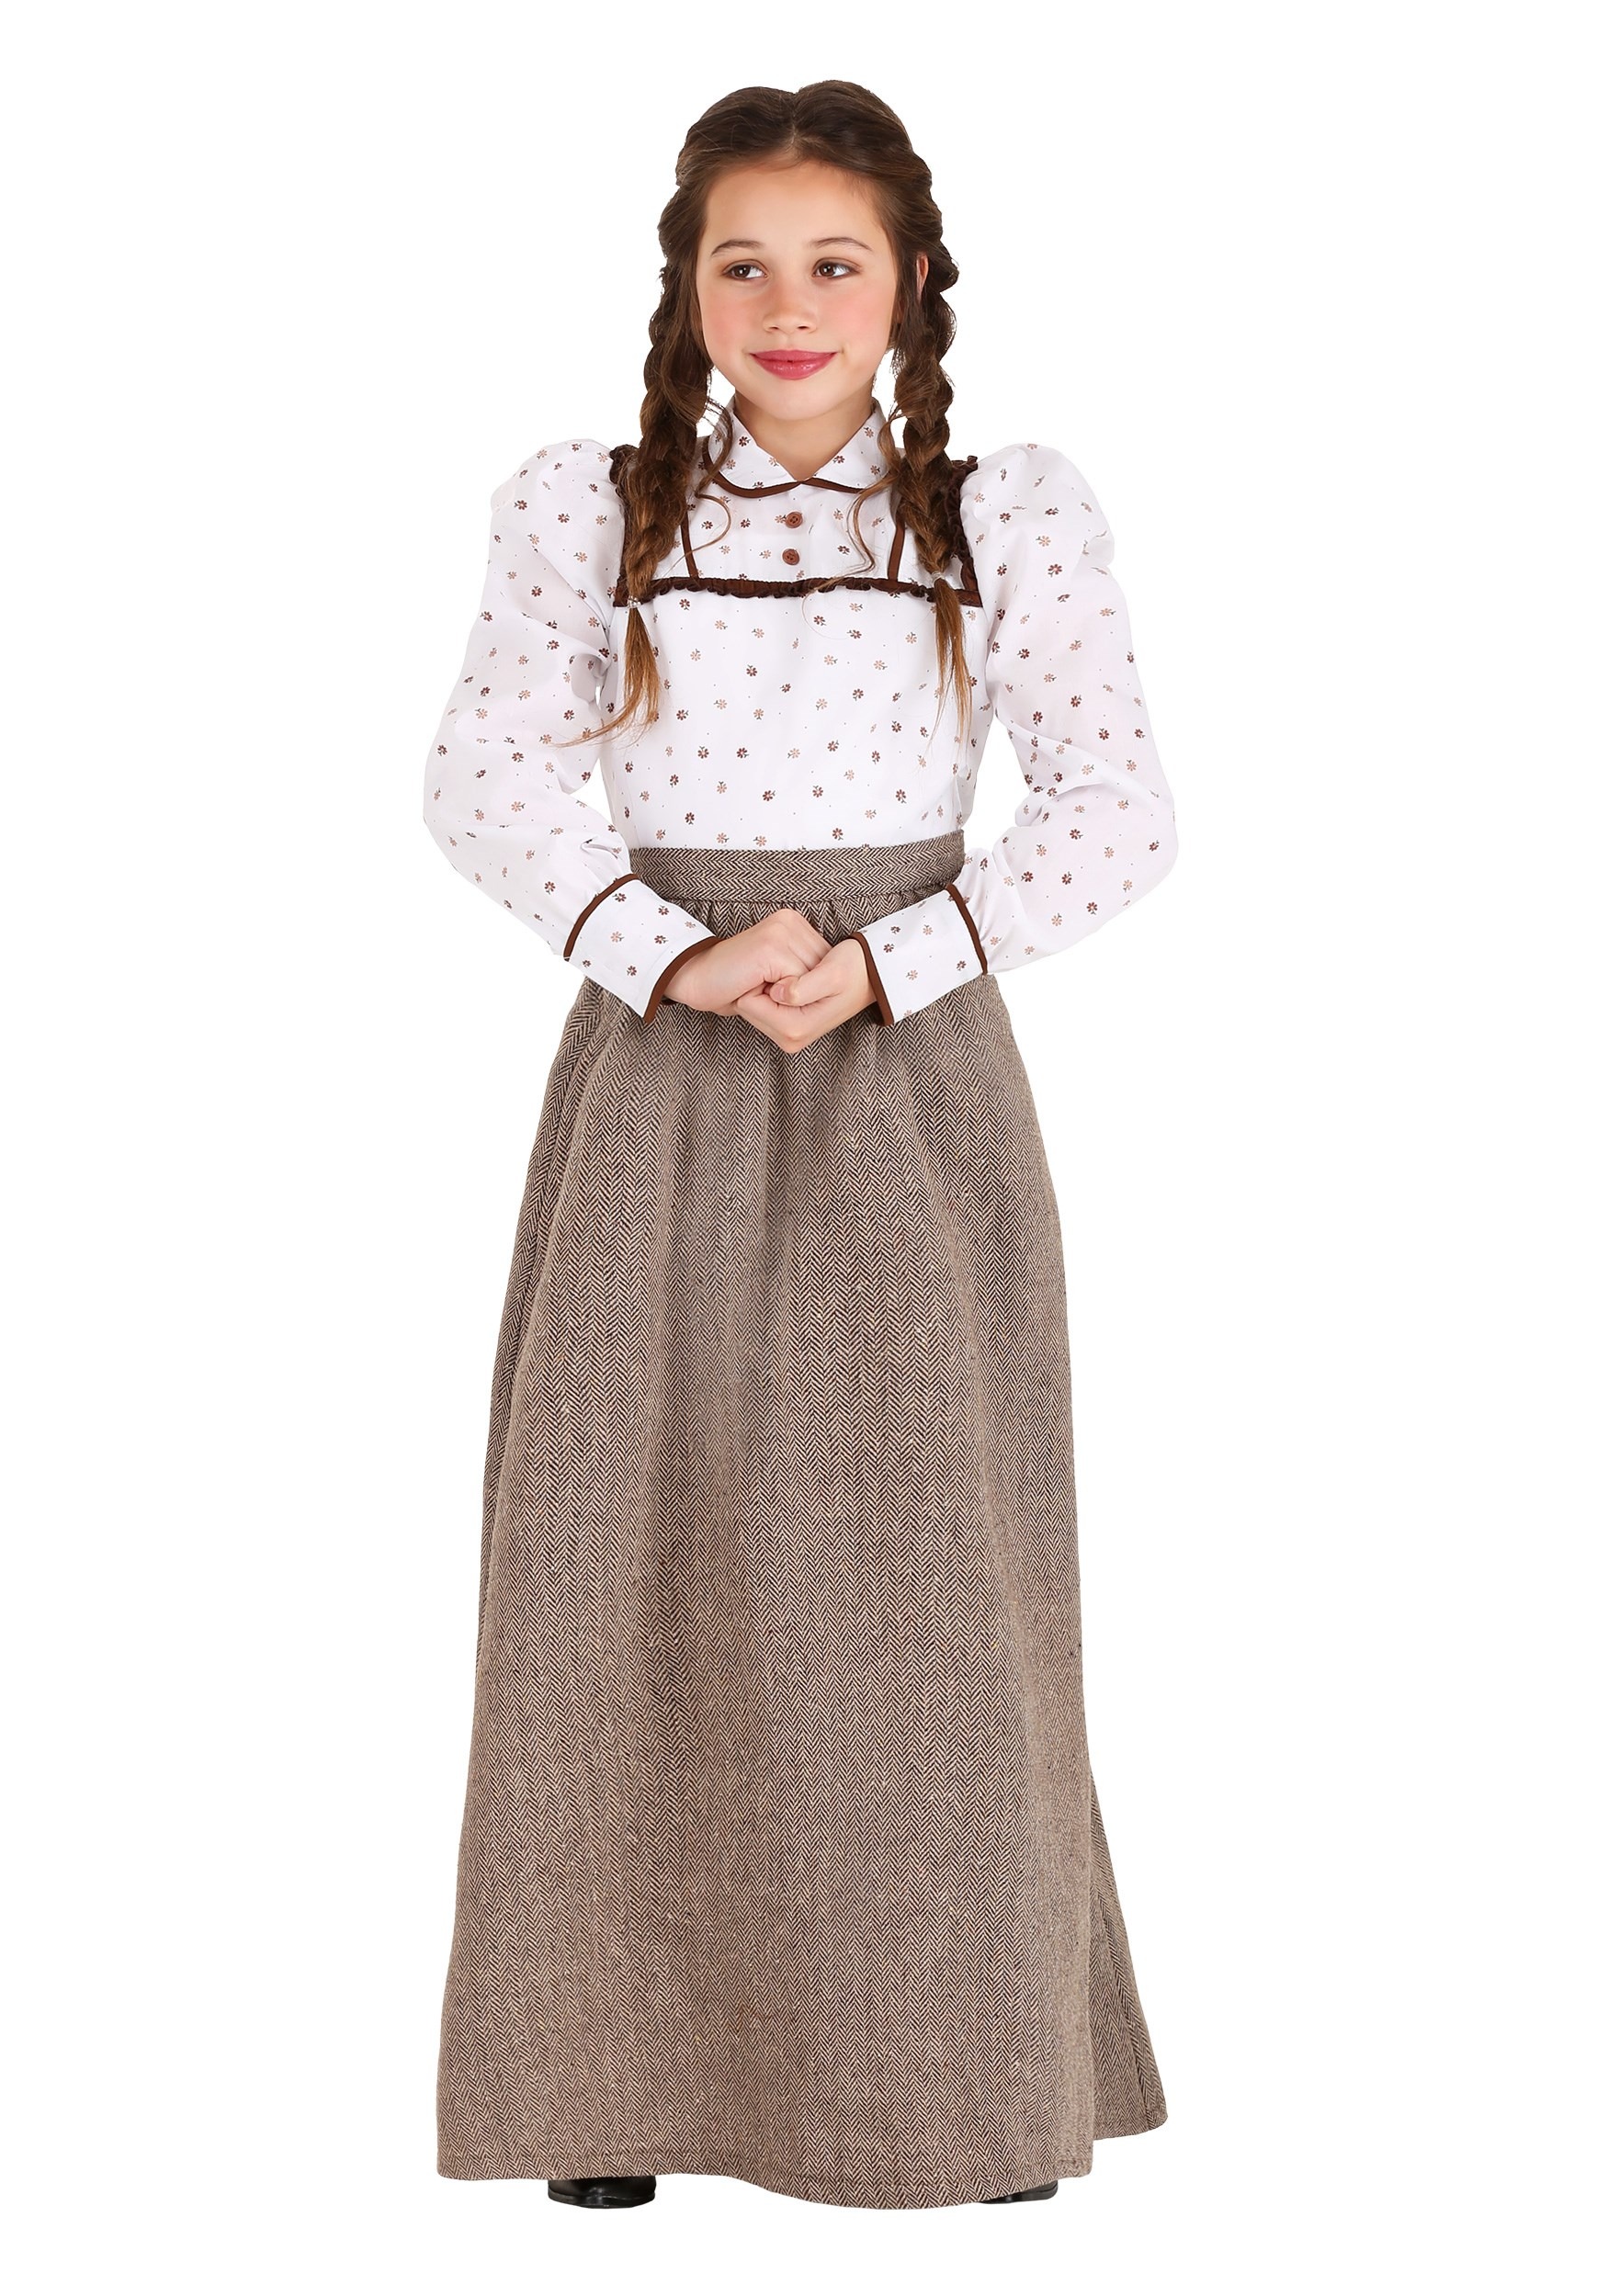 Photos - Fancy Dress Westward FUN Costumes Girl's  Pioneer Costume Brown/White FUN1304CH 